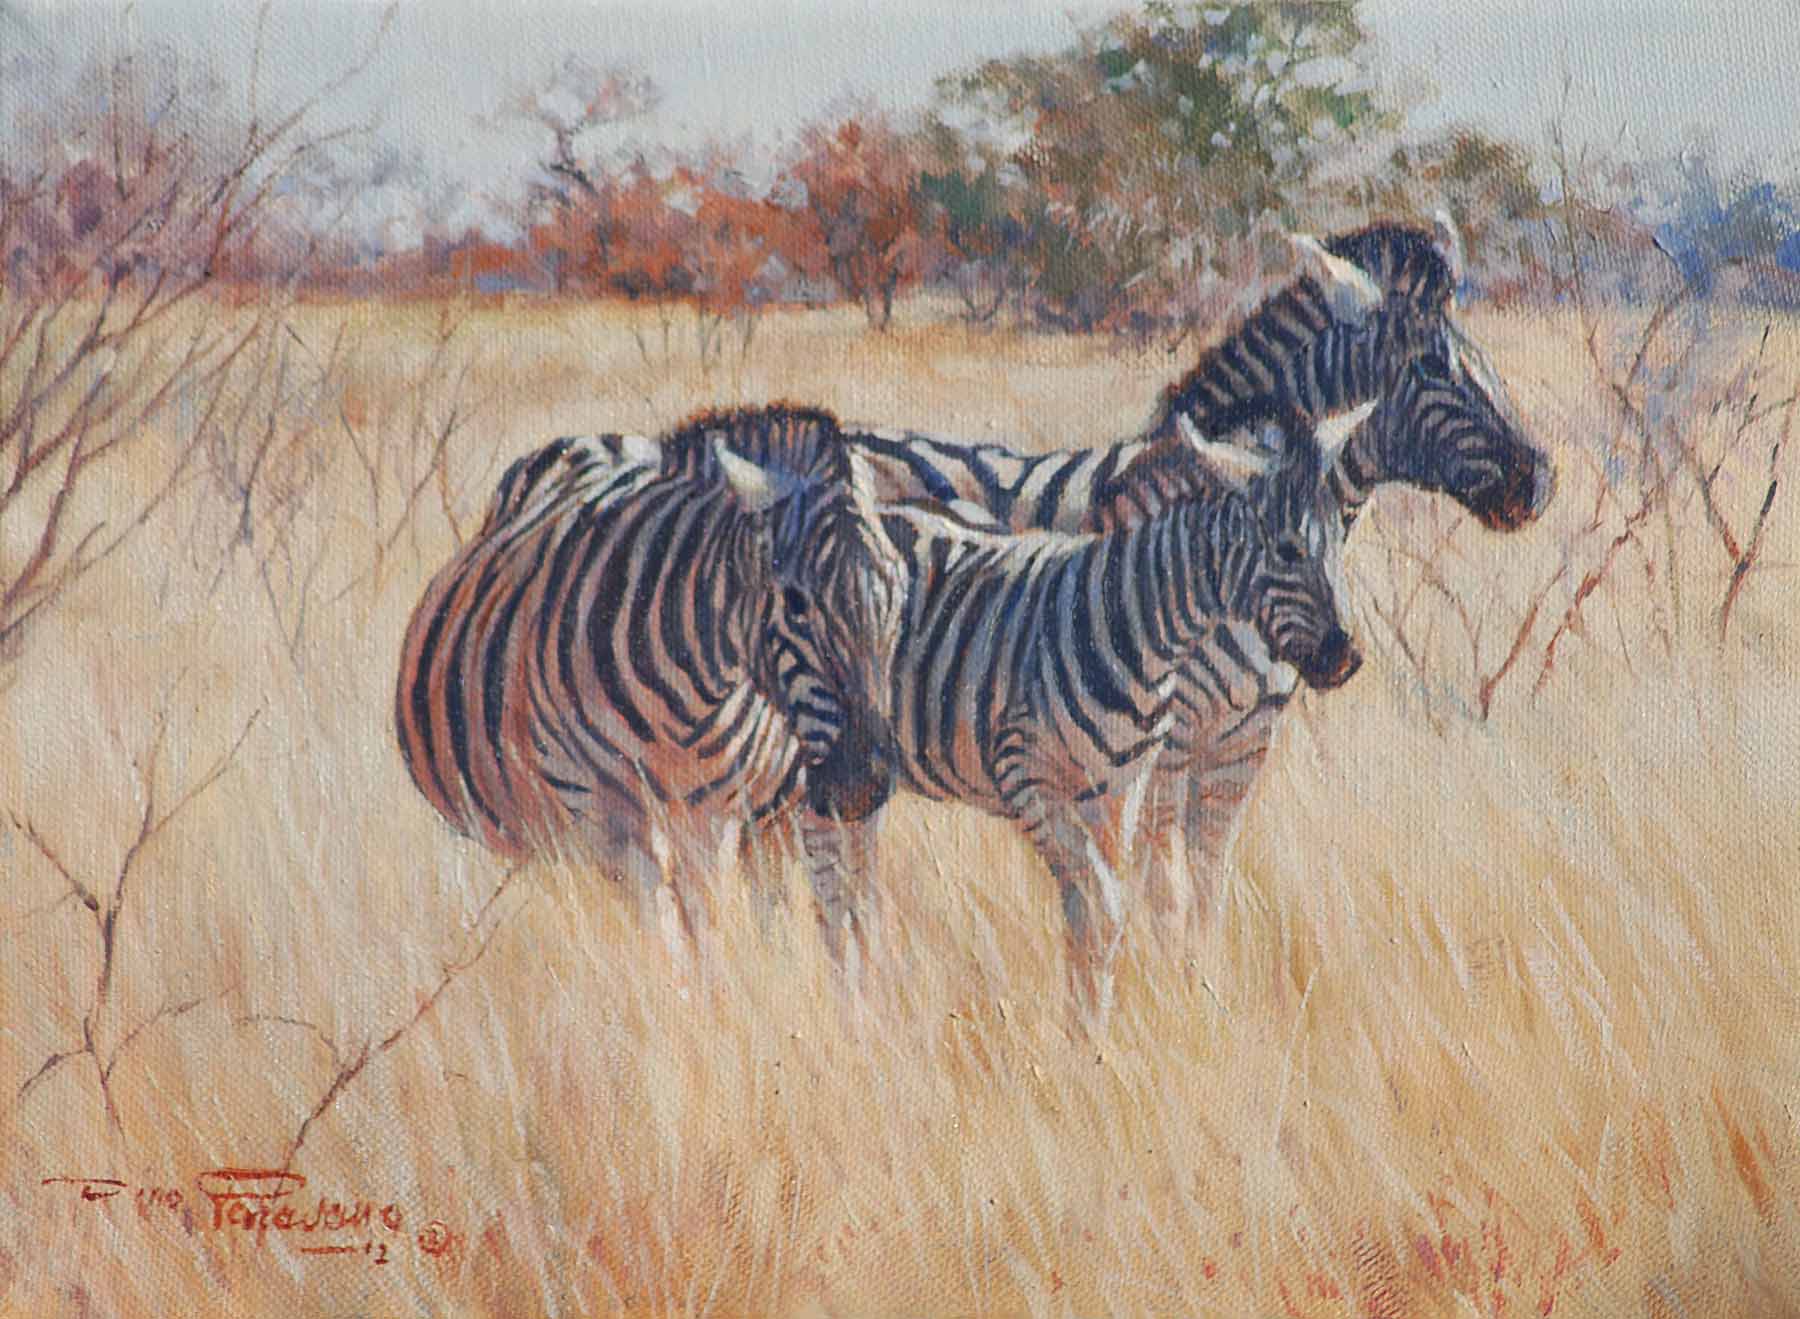 DP2 – Zebra in High Grass © Dino Paravano